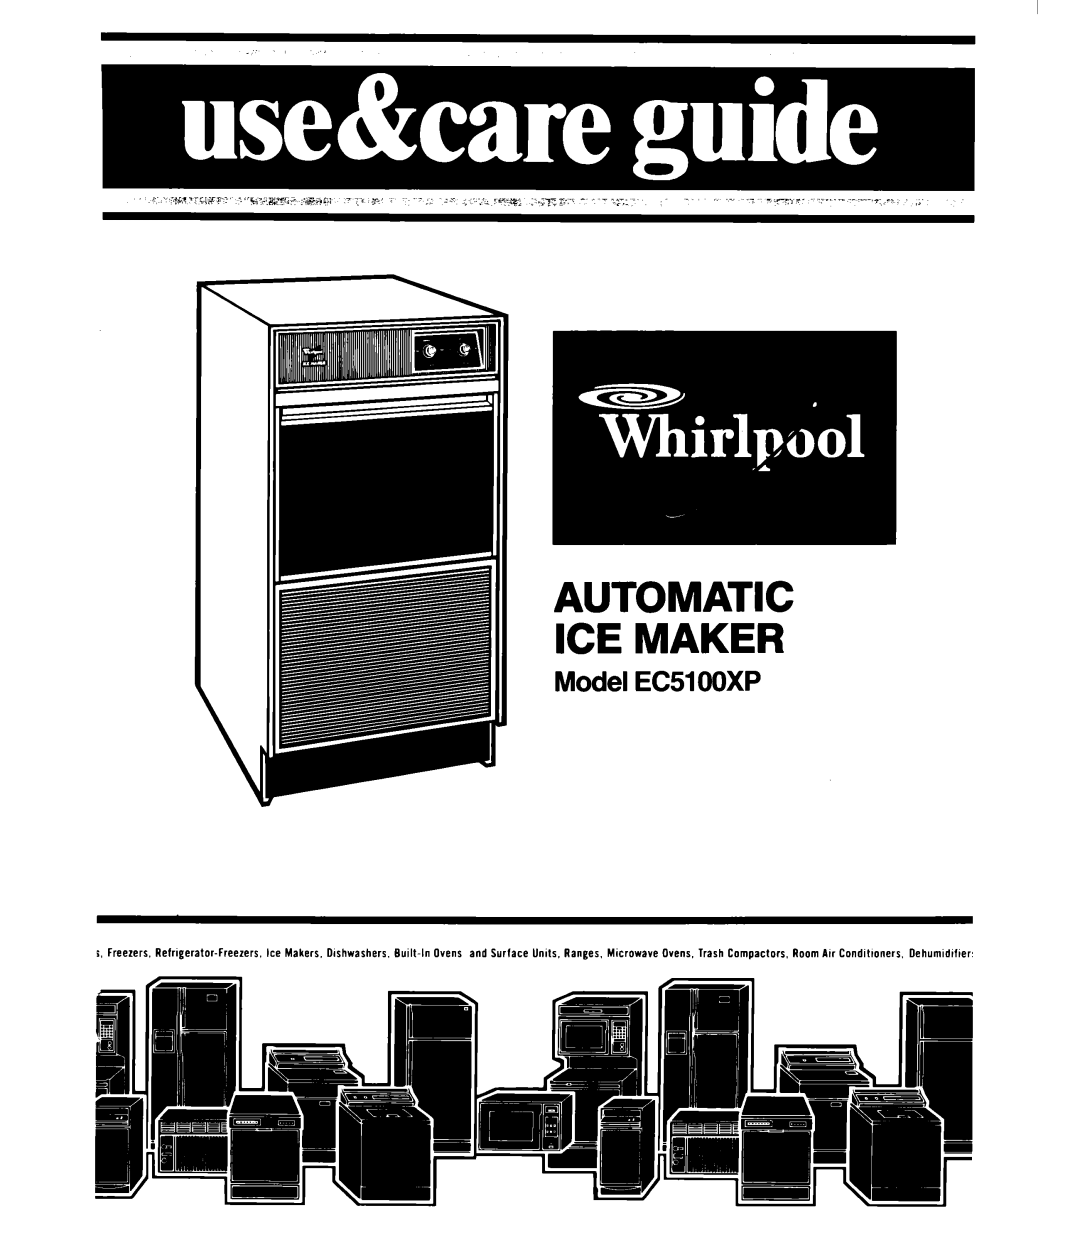 Whirlpool EC5100XP manual Automatic Ice Maker, Model ECUOOXP 